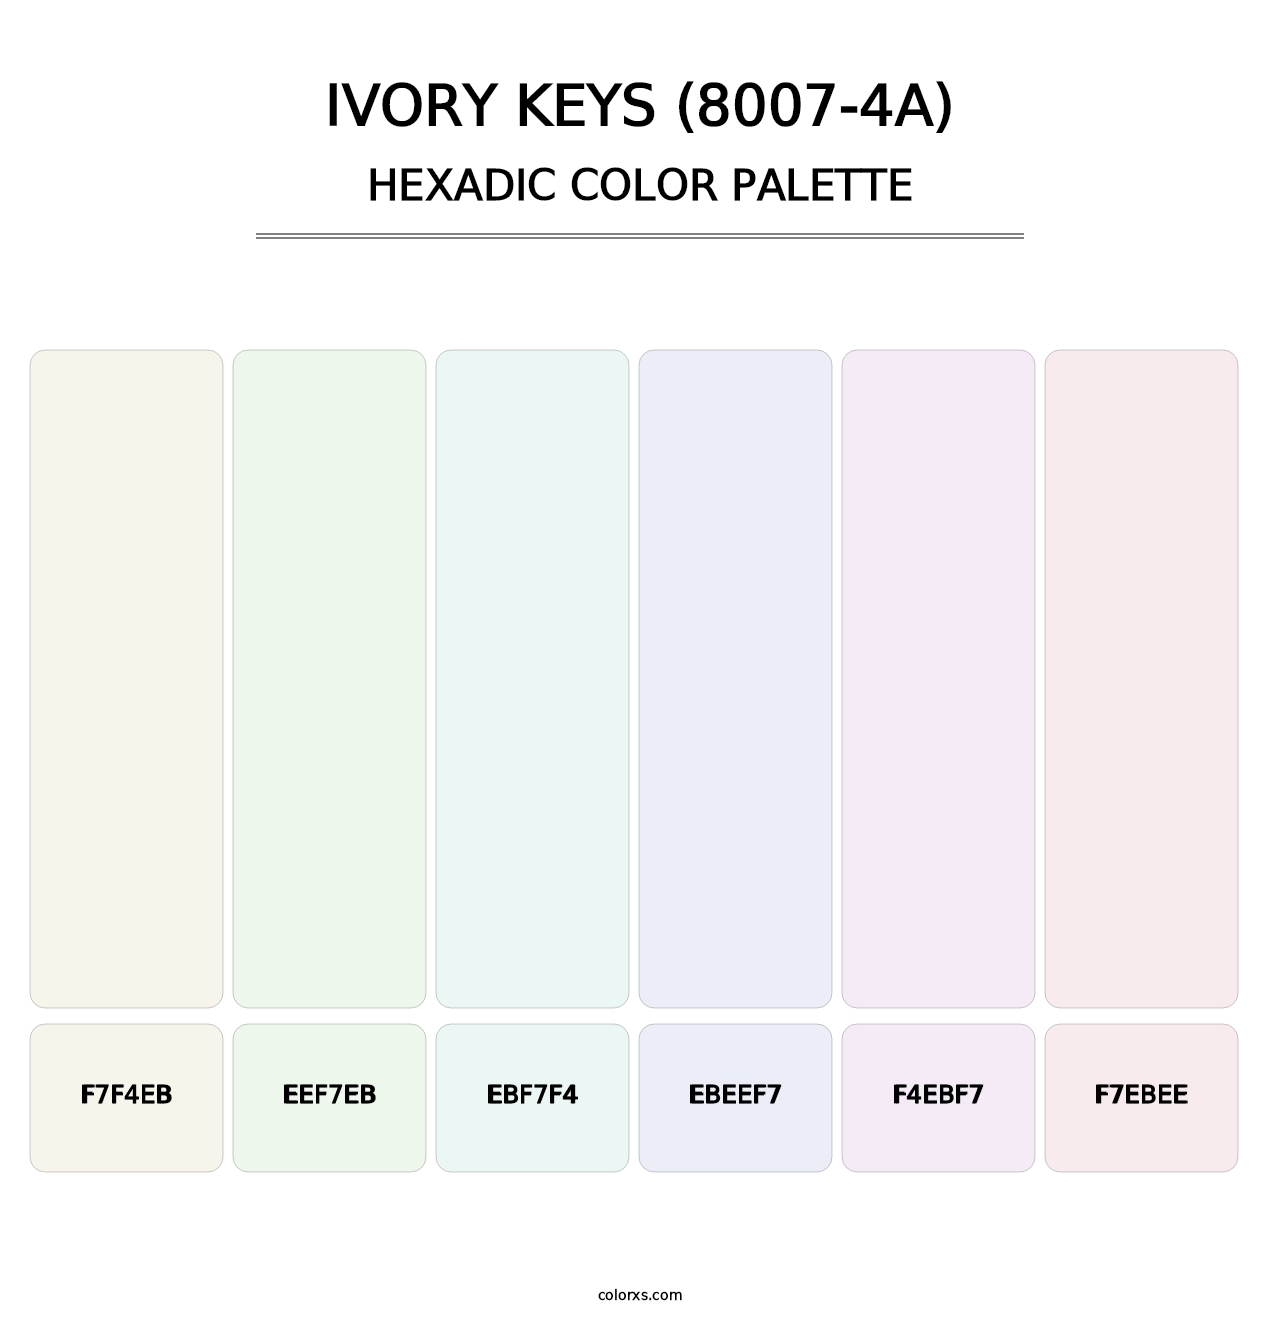 Ivory Keys (8007-4A) - Hexadic Color Palette